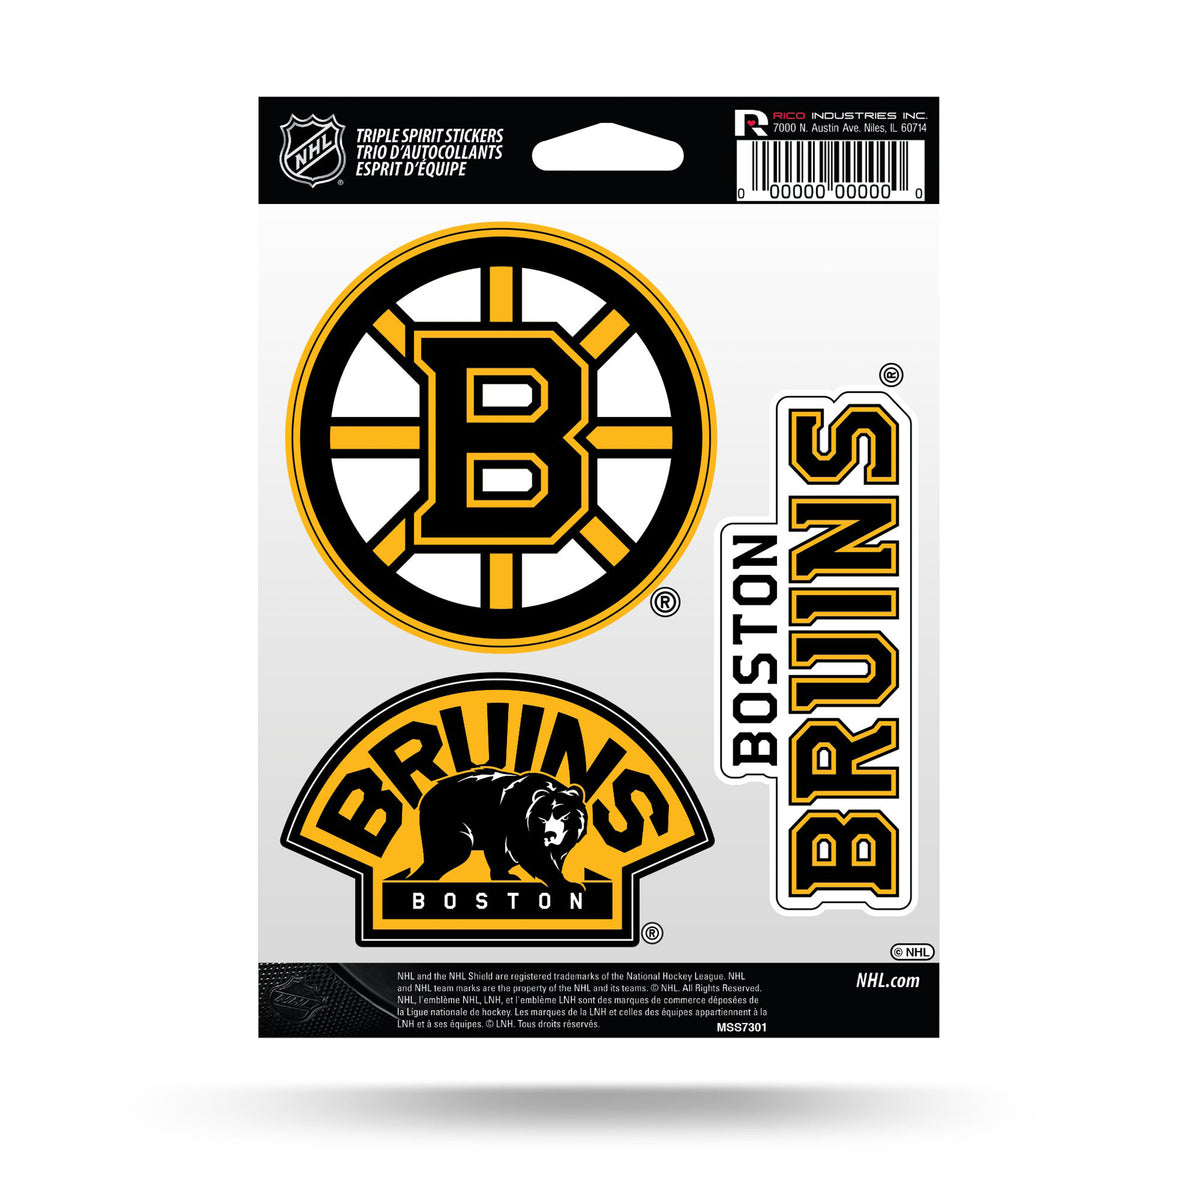 Boston Bruins Triple Spirit Stickers